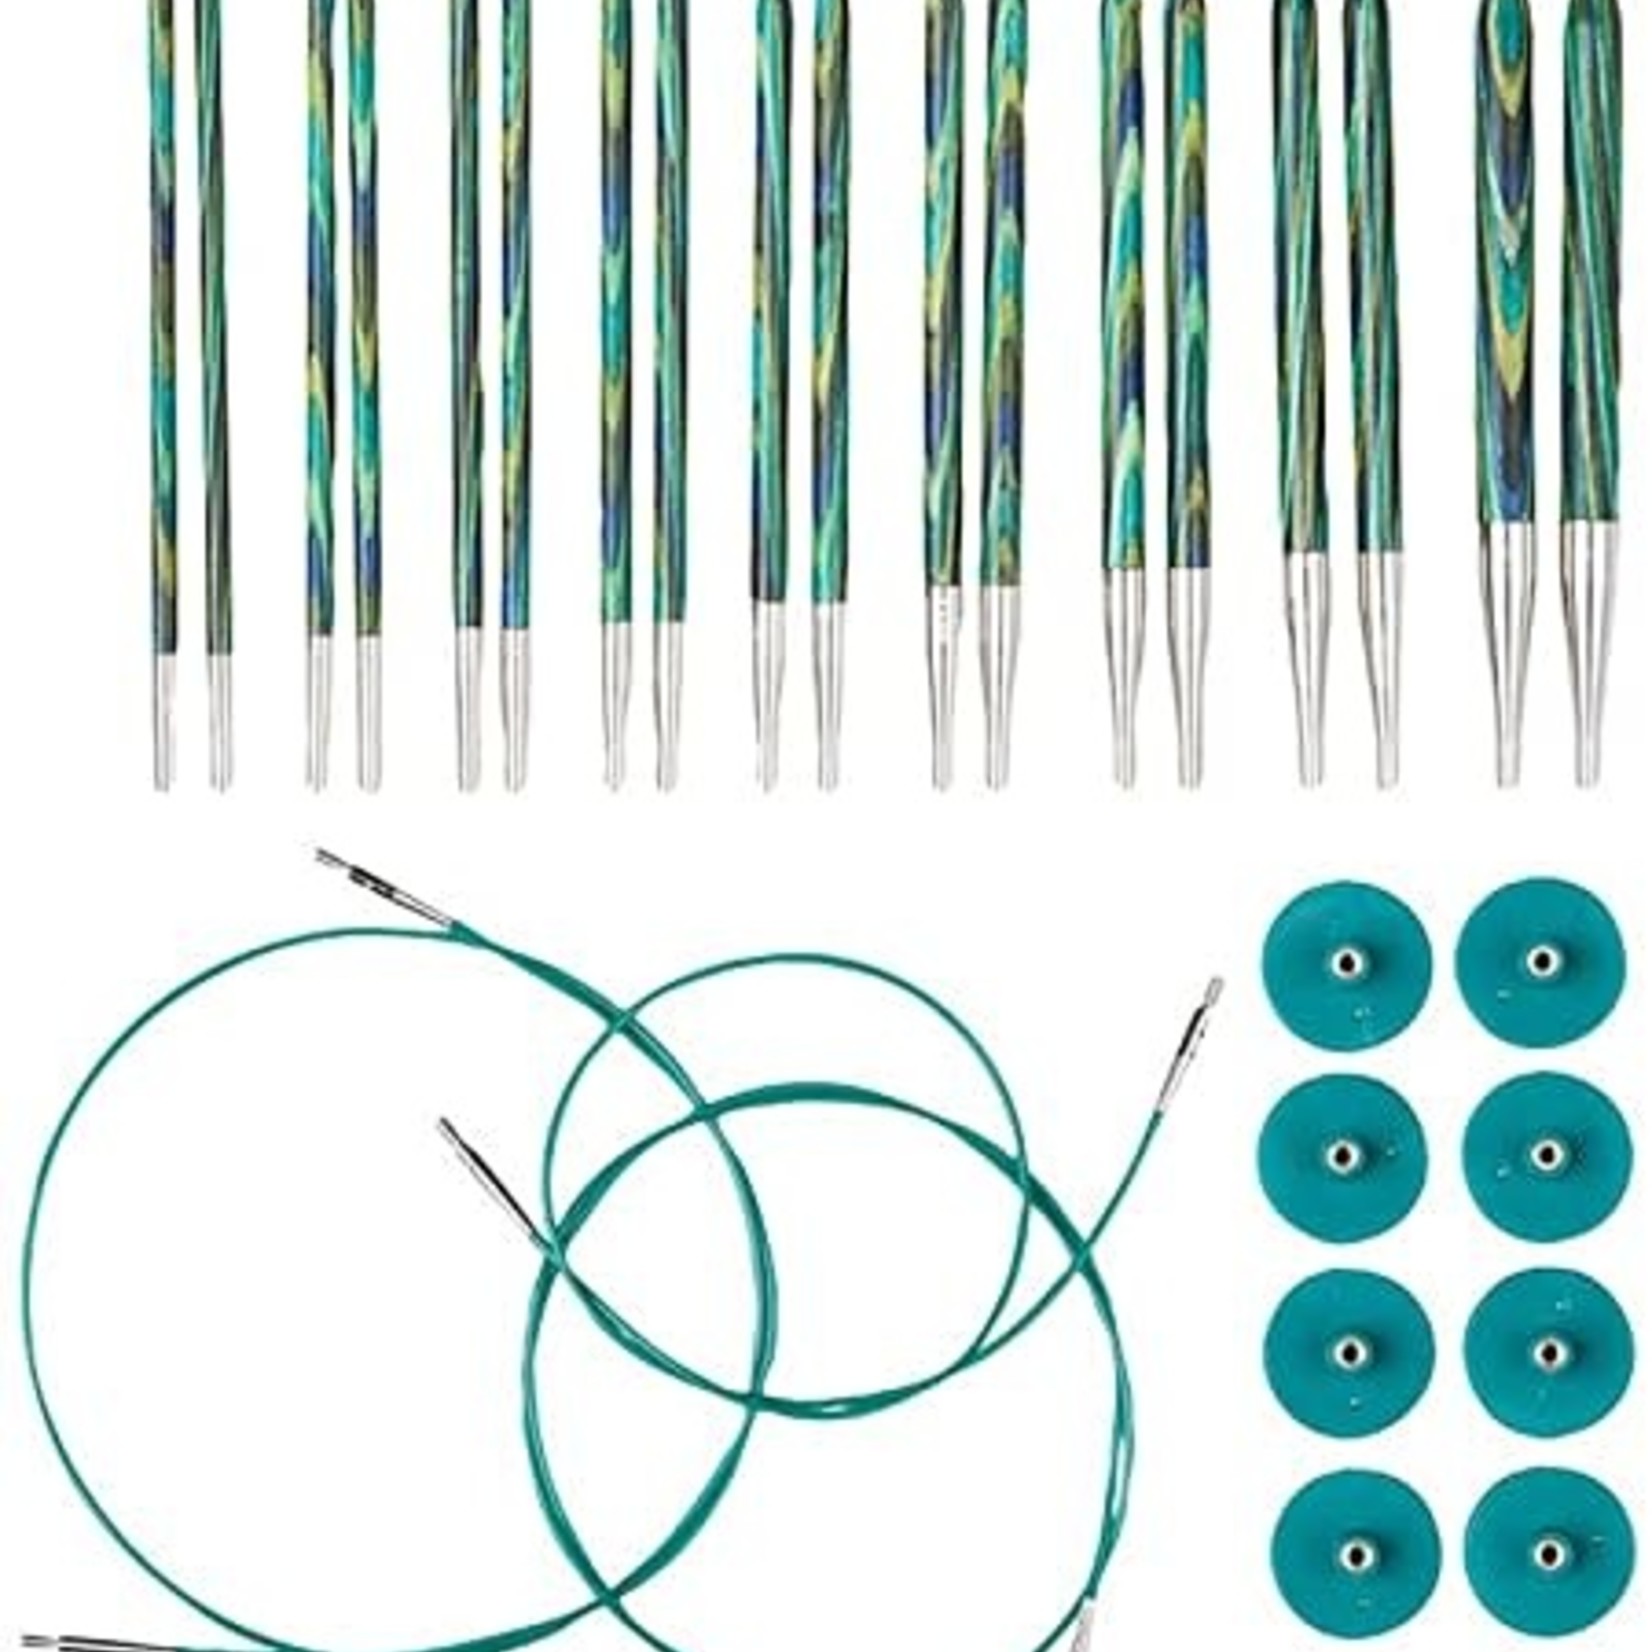 Knit Picks Caspian Options Interchangeable Circular Set by Knit Picks